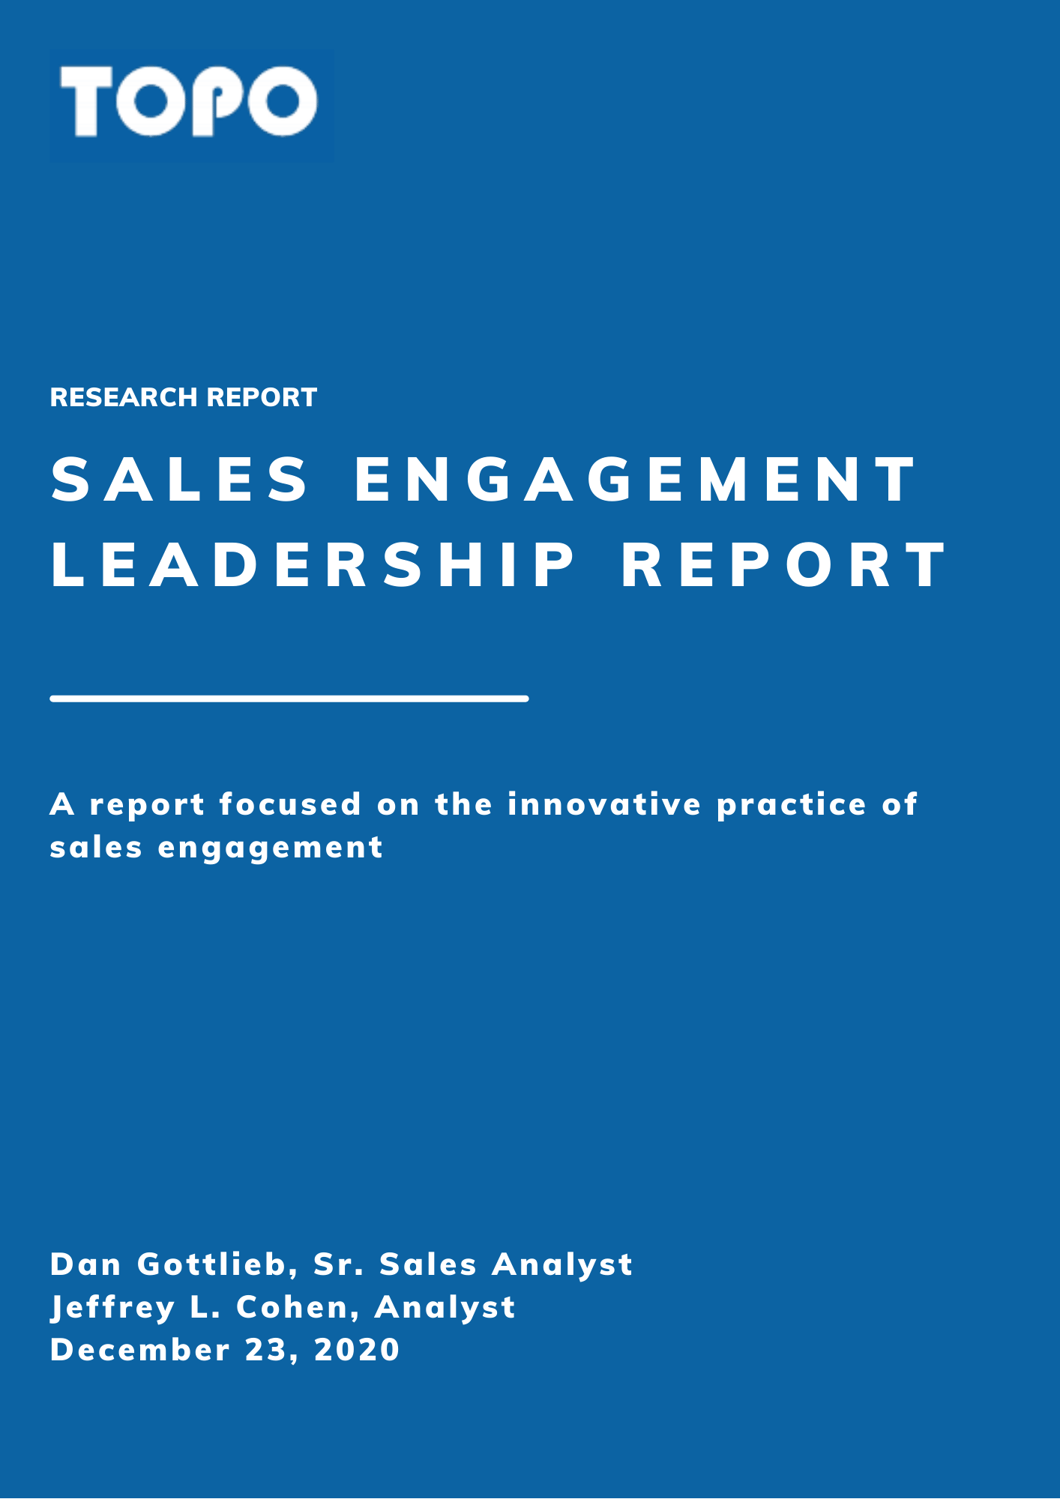 topo sales engagement image 